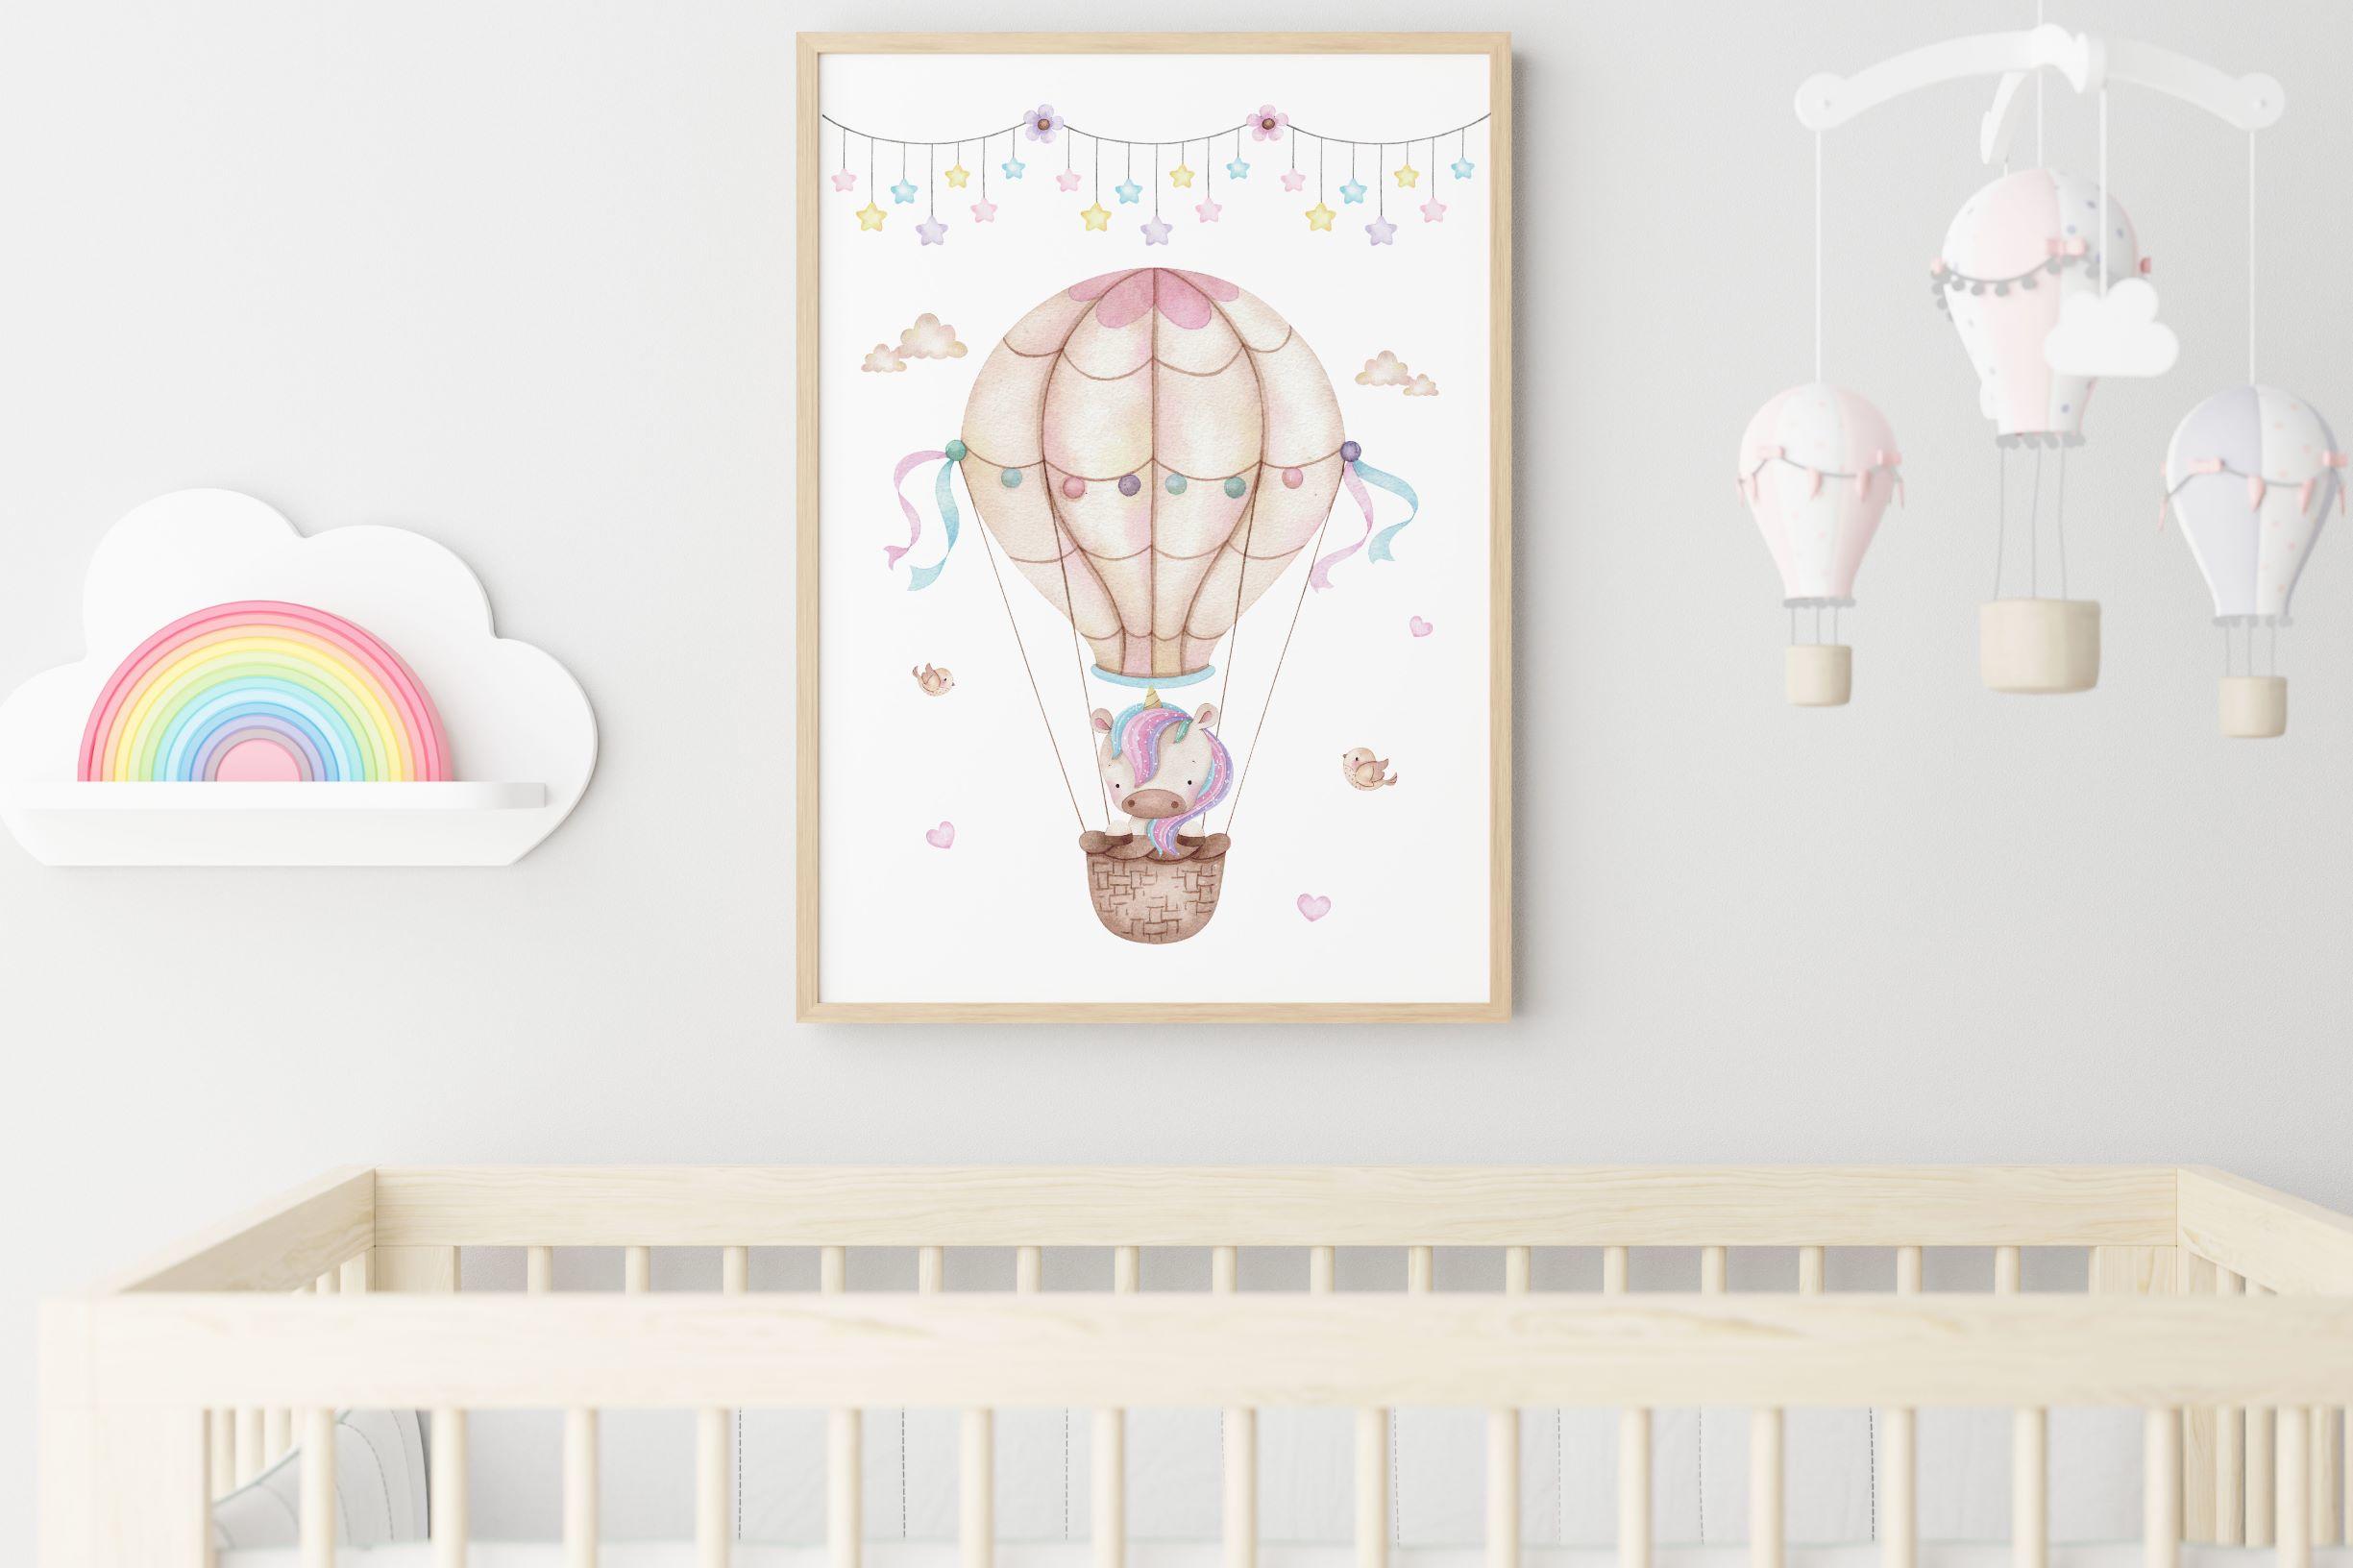 Unicorn Print-Up and Away-Unicorn Themed Bedroom,Nursery,New Baby,Christening Gift